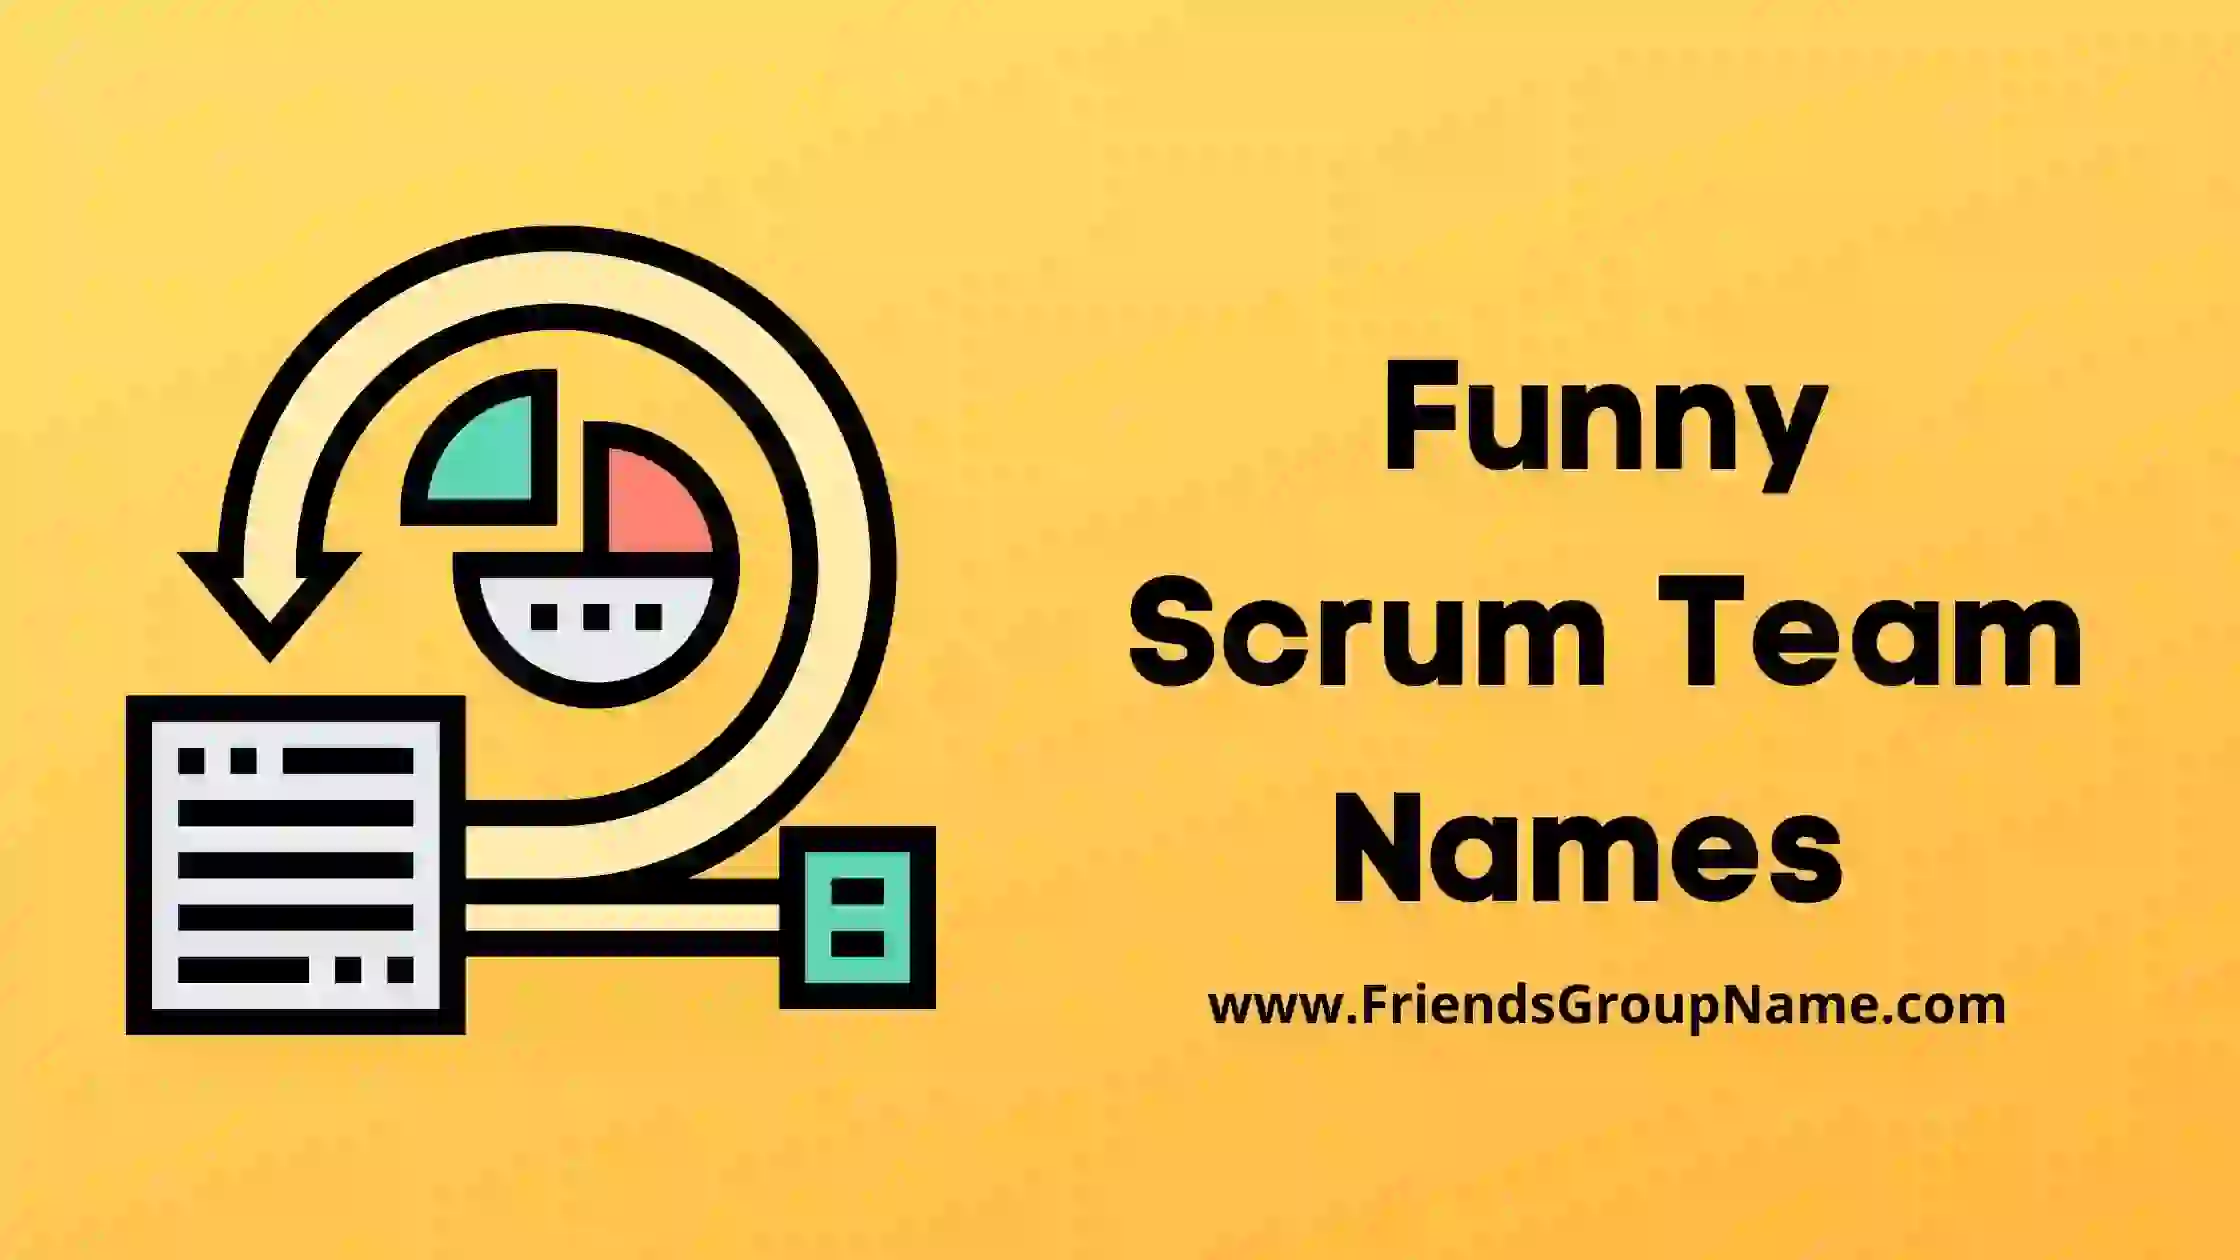 Funny Scrum Team Names